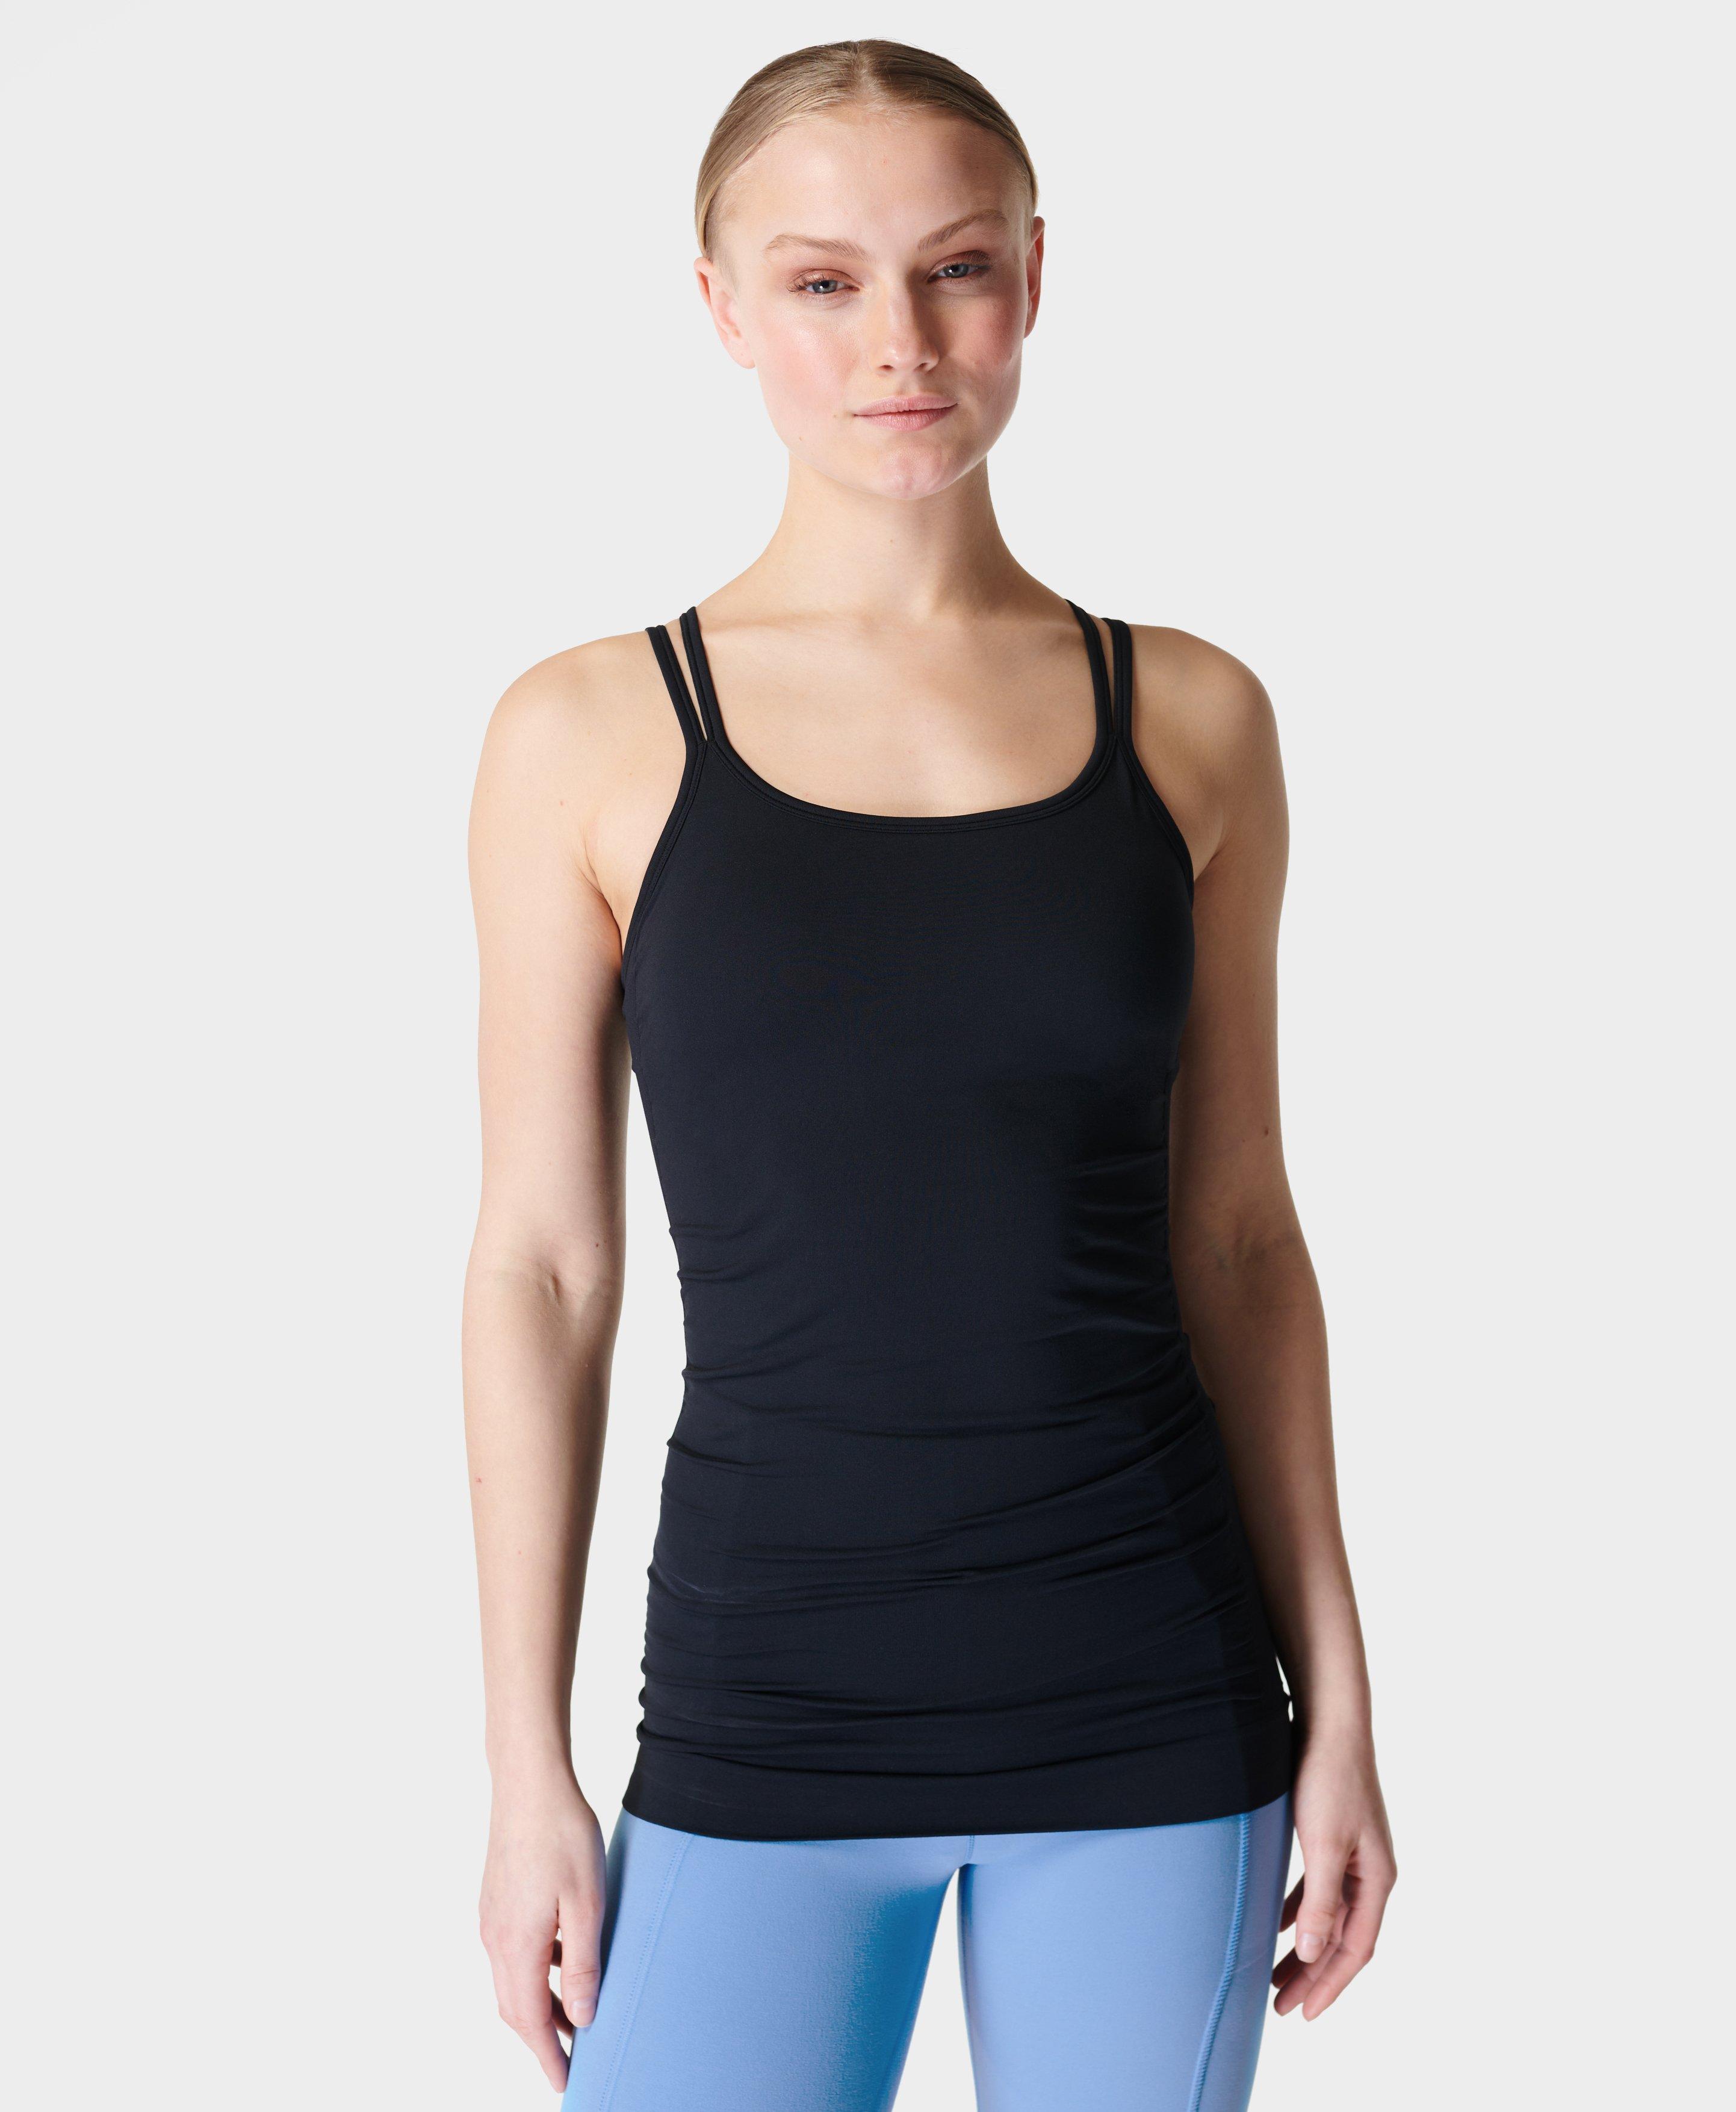 Poise Seamless Yoga Vest - Black, Women's Vests